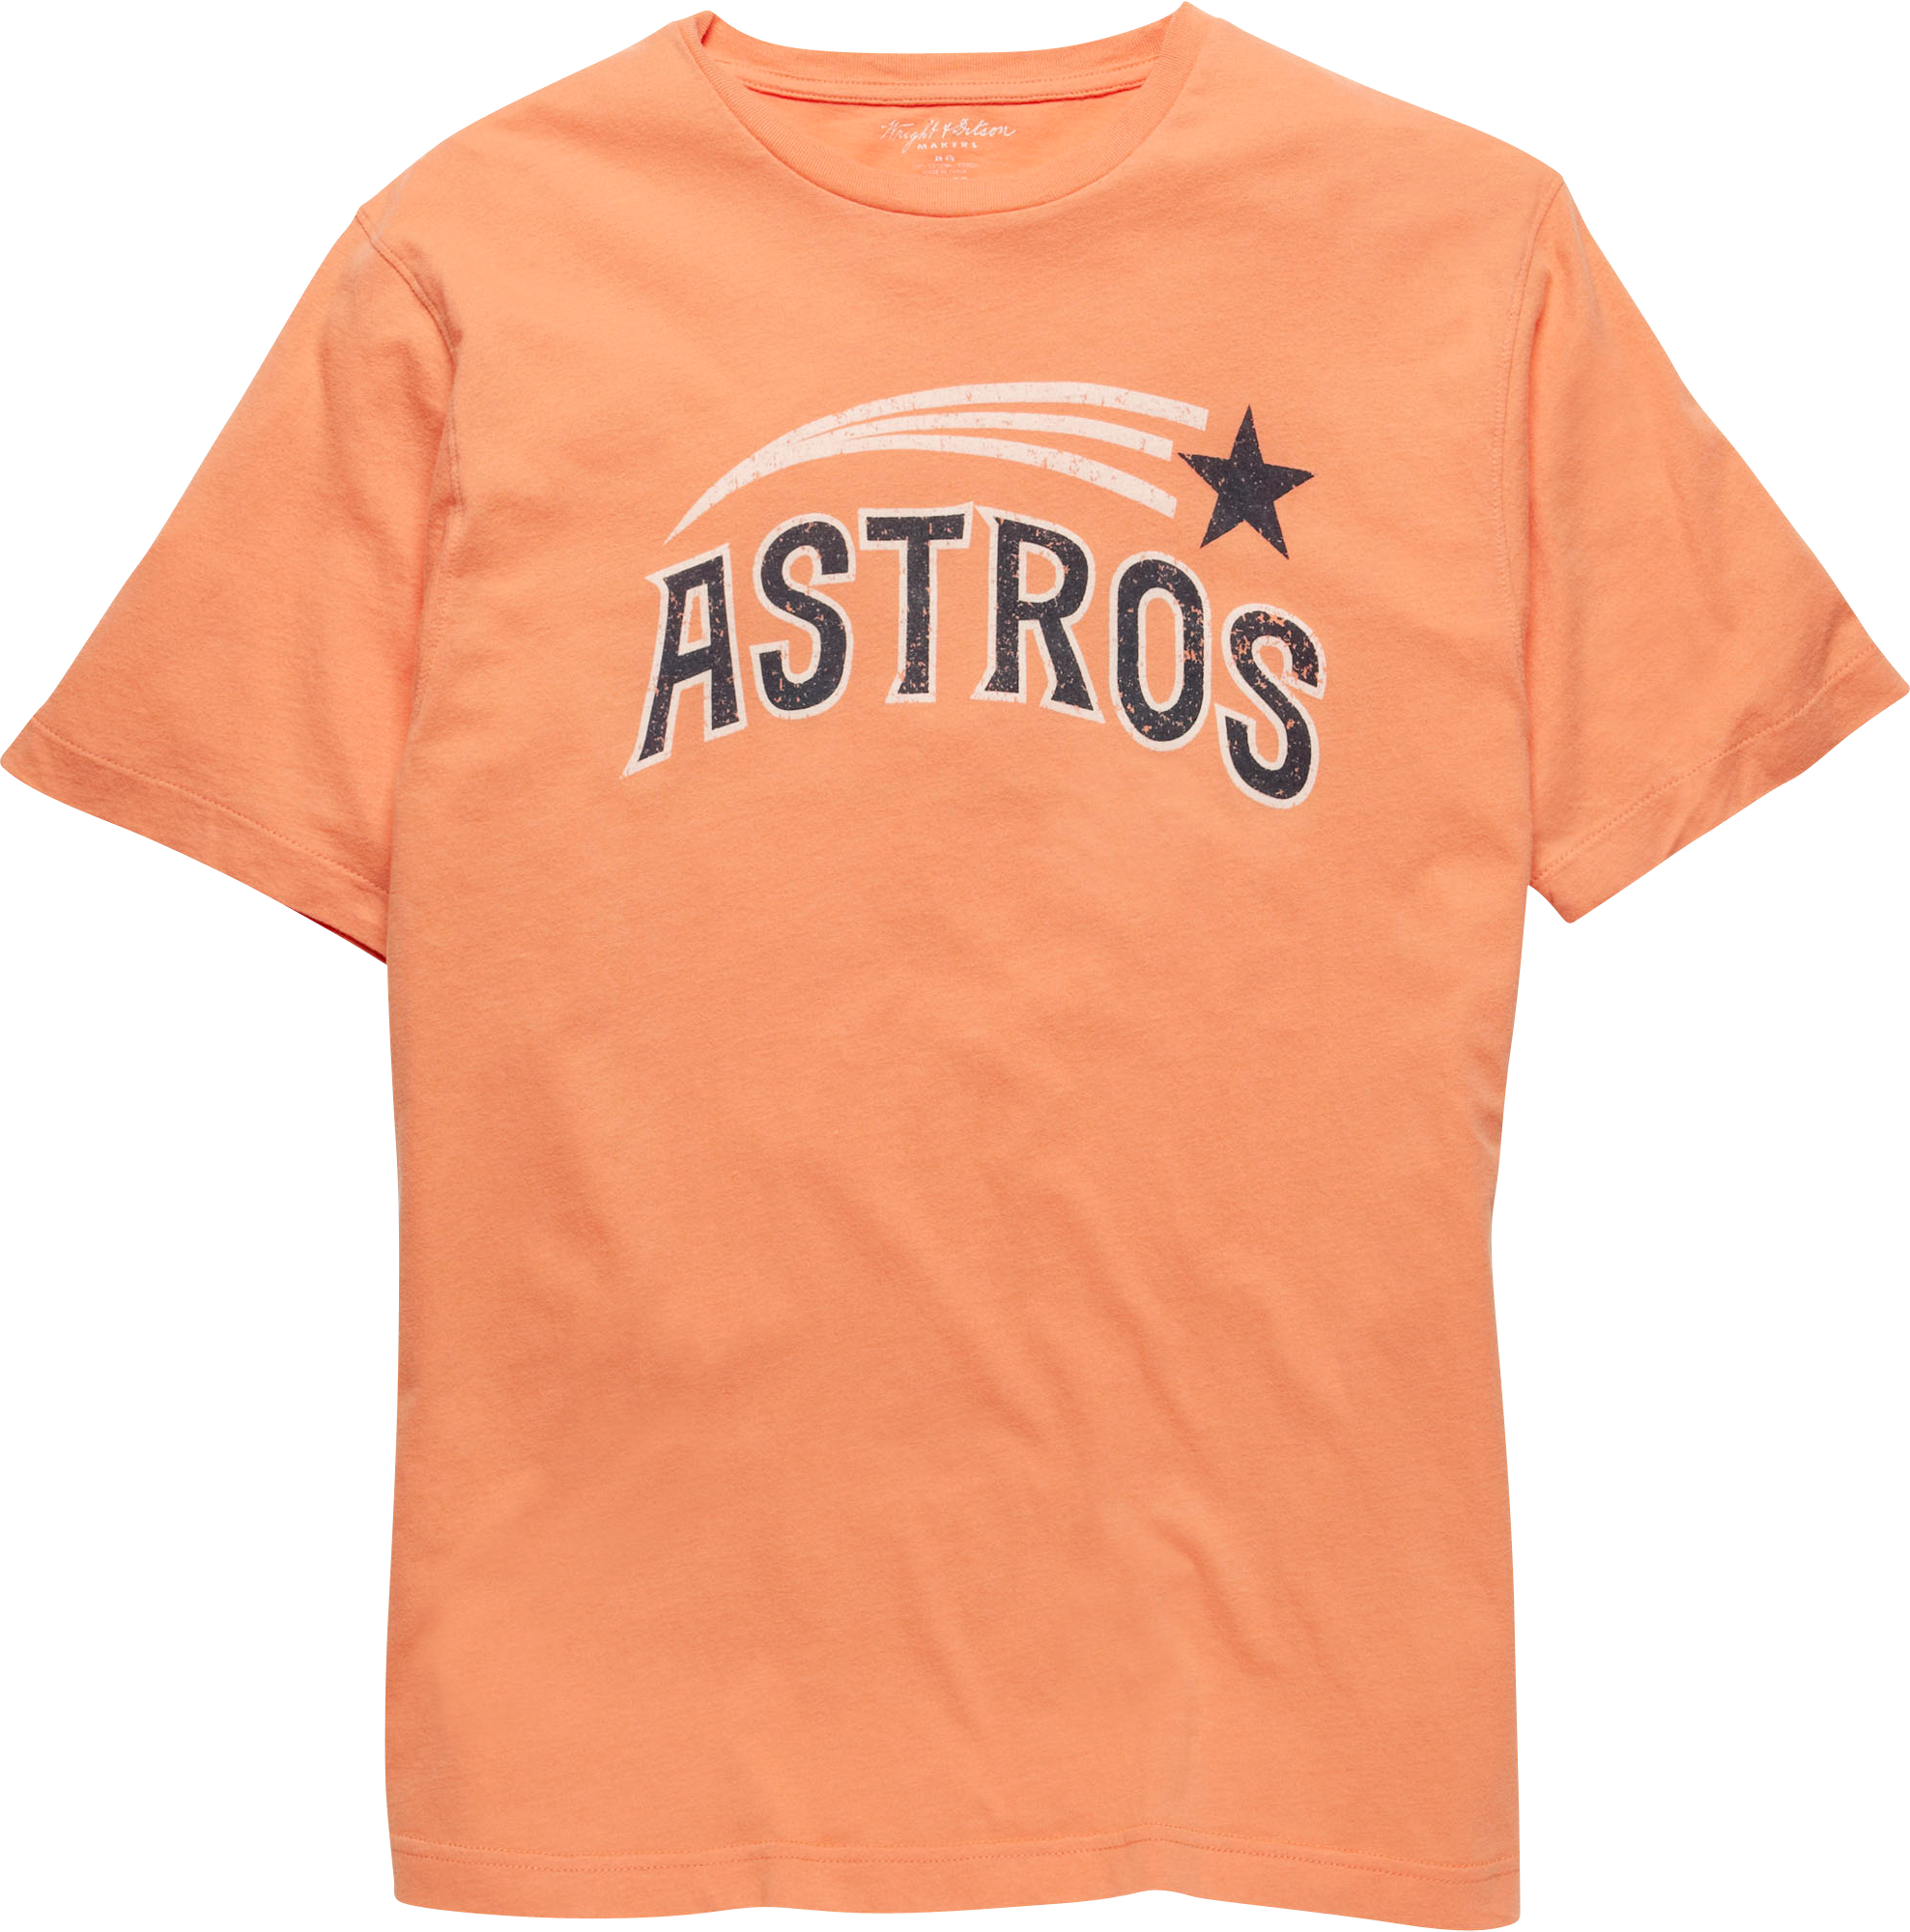 astros orange shirt